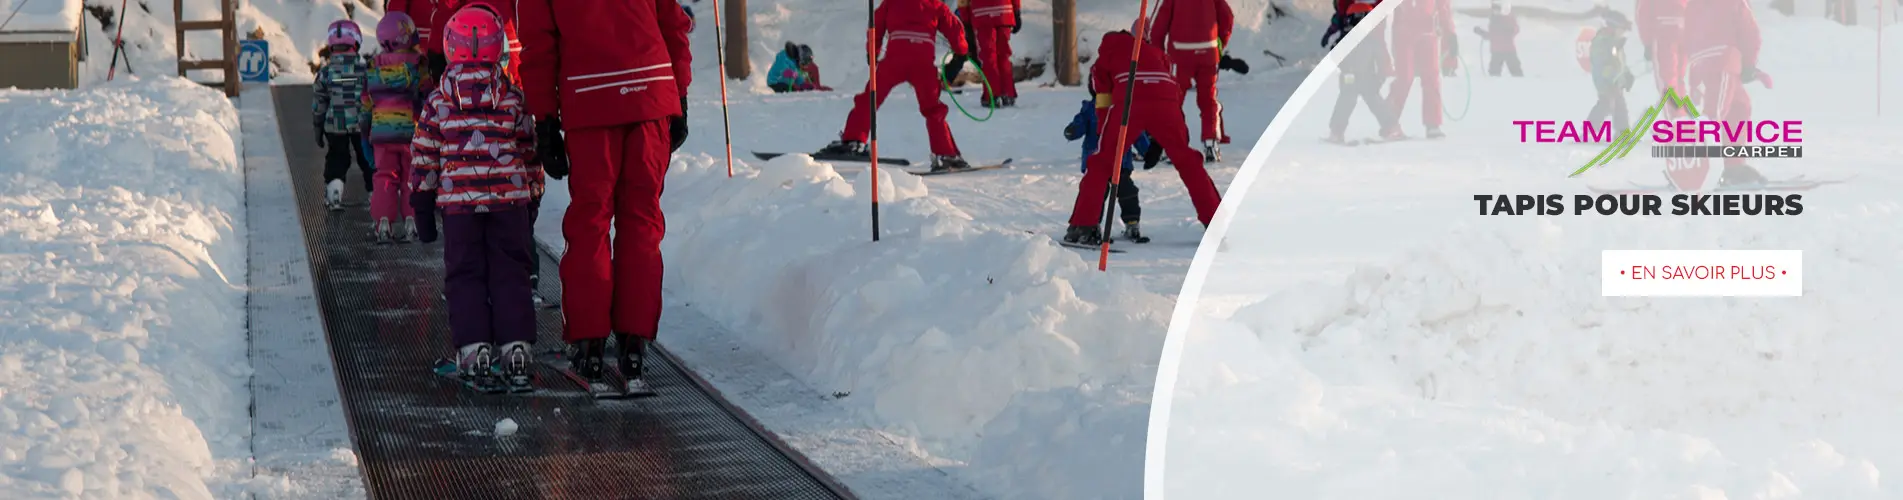 Team Service : tapis roulant pour skieurs